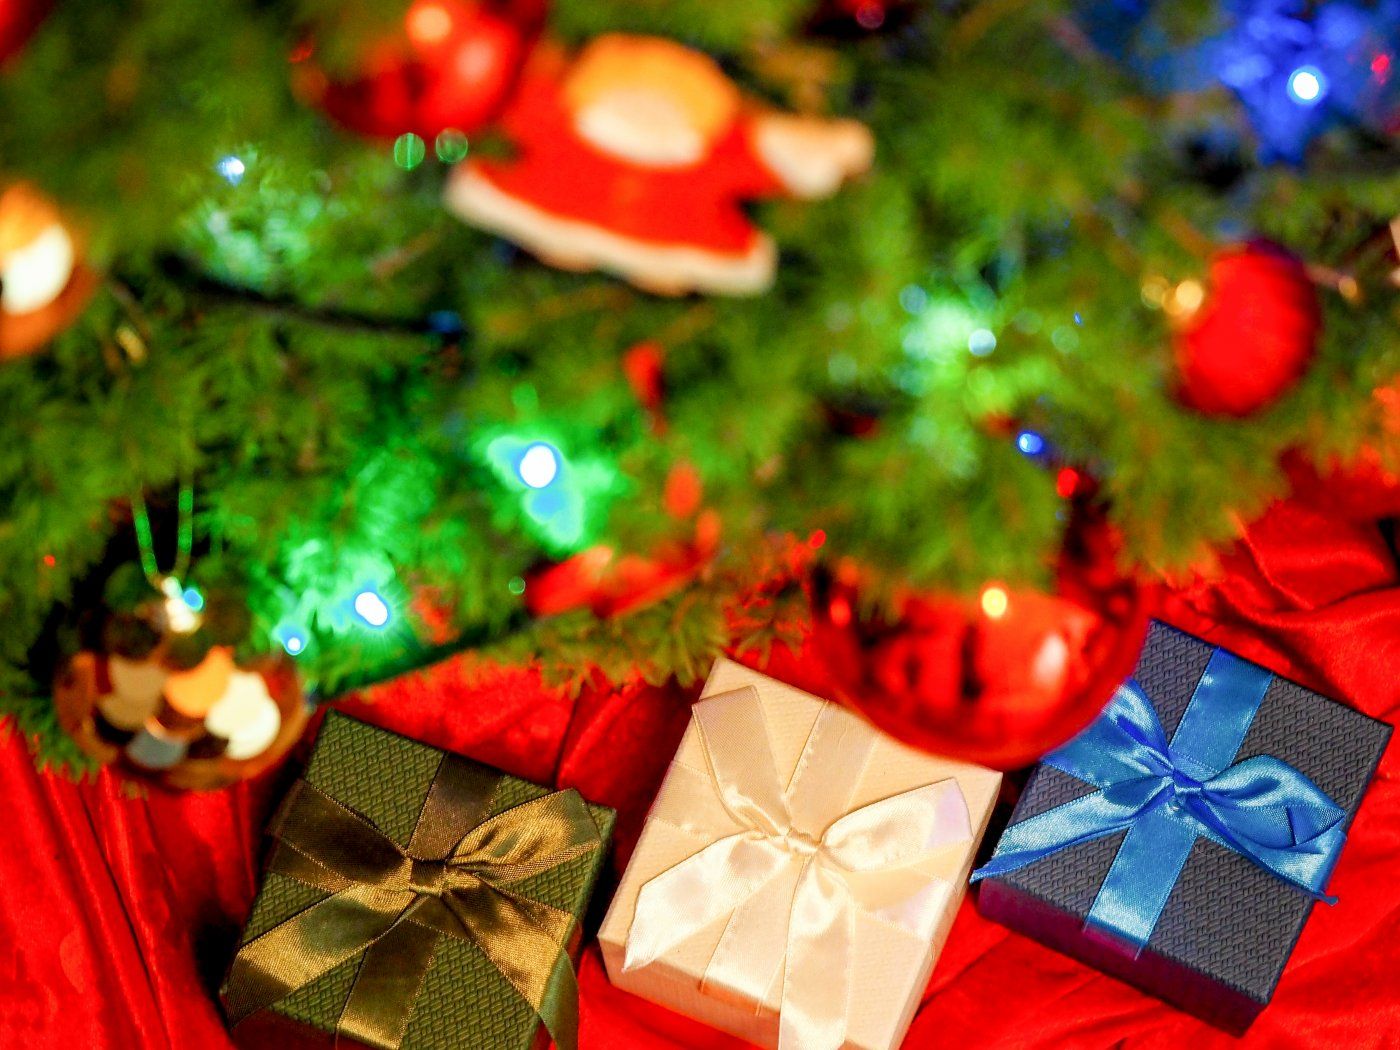 Three Christmas presents under the tree